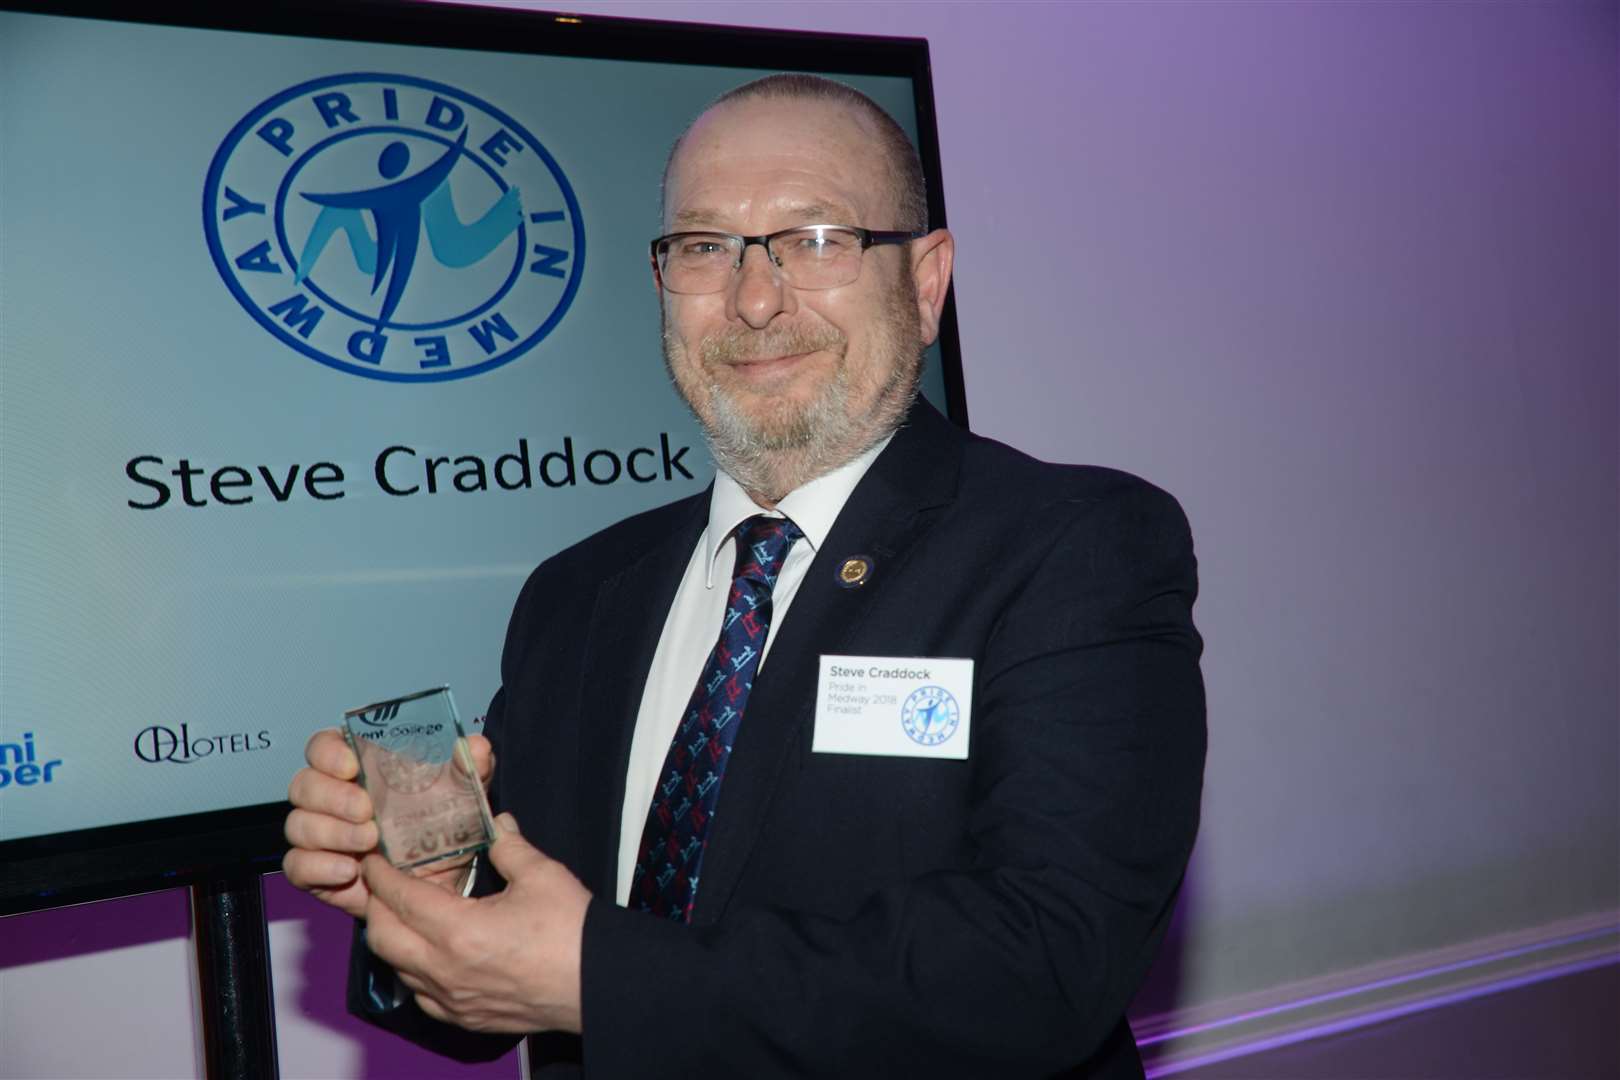 AQrmy veteran Steve Craddock was presented a.Pride in Medway award